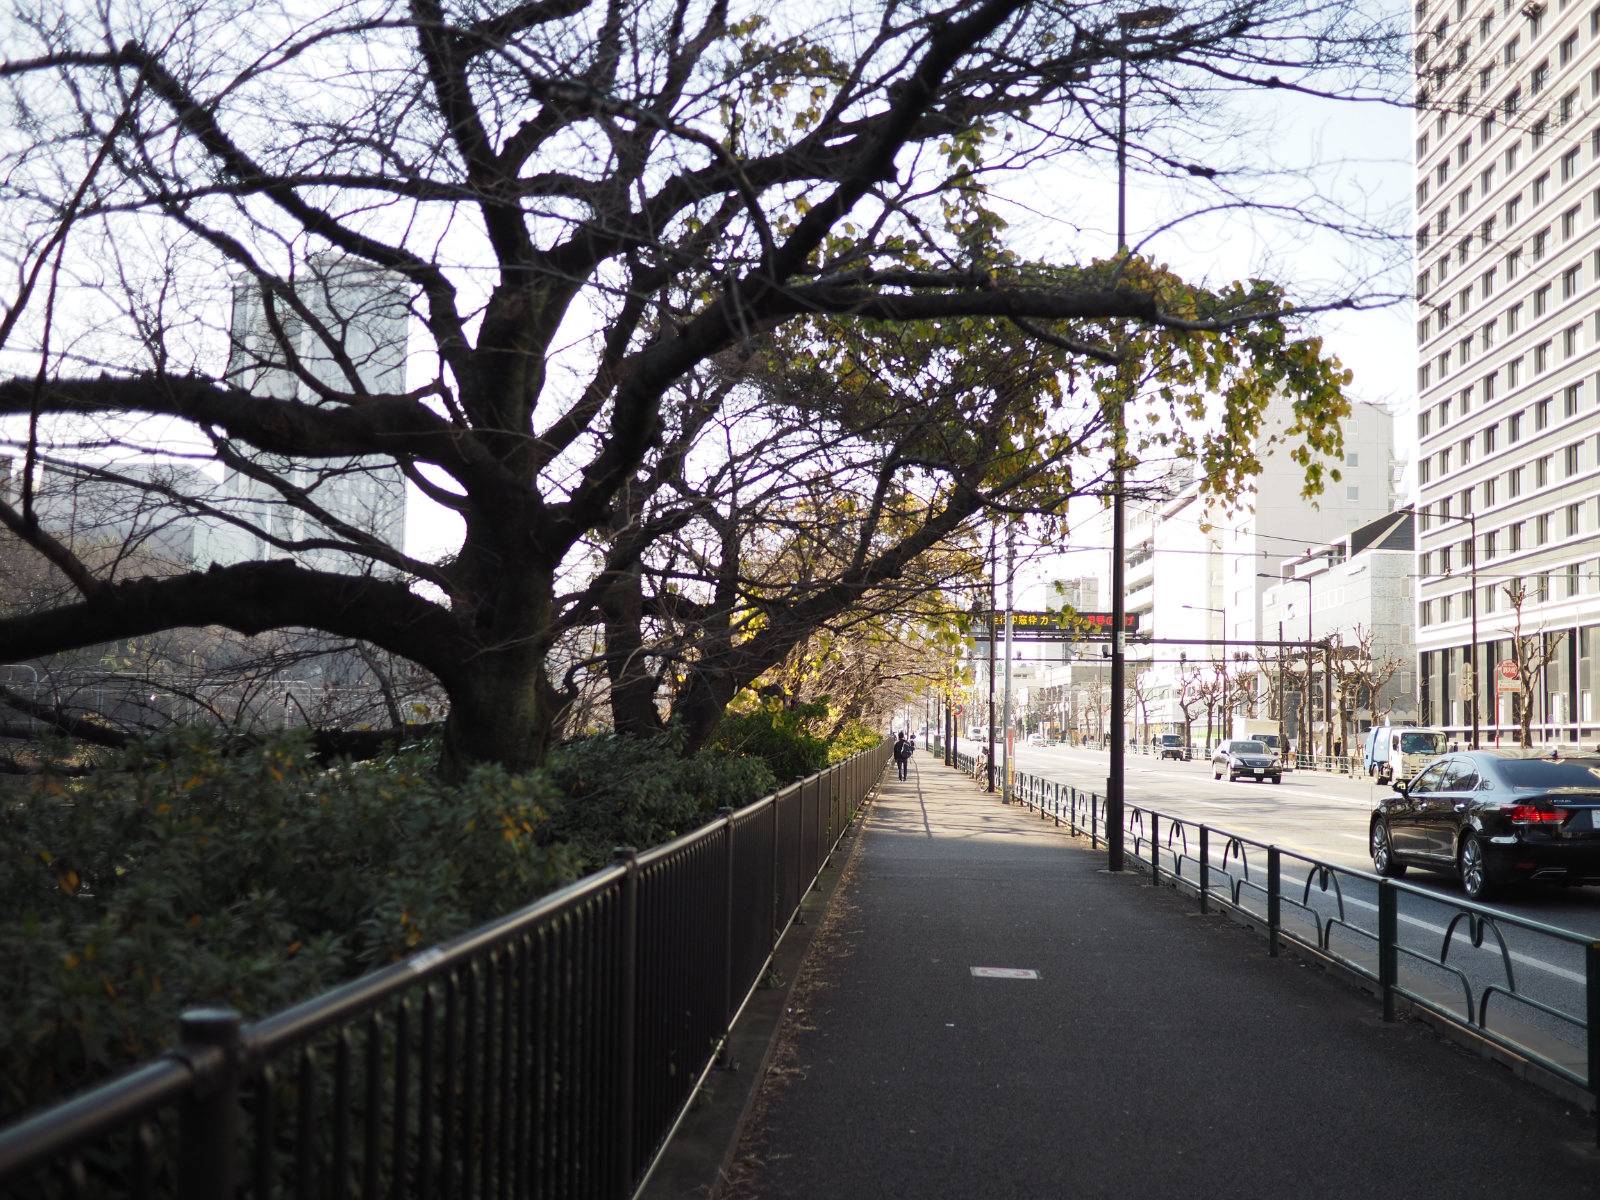 Sidewalk with trees